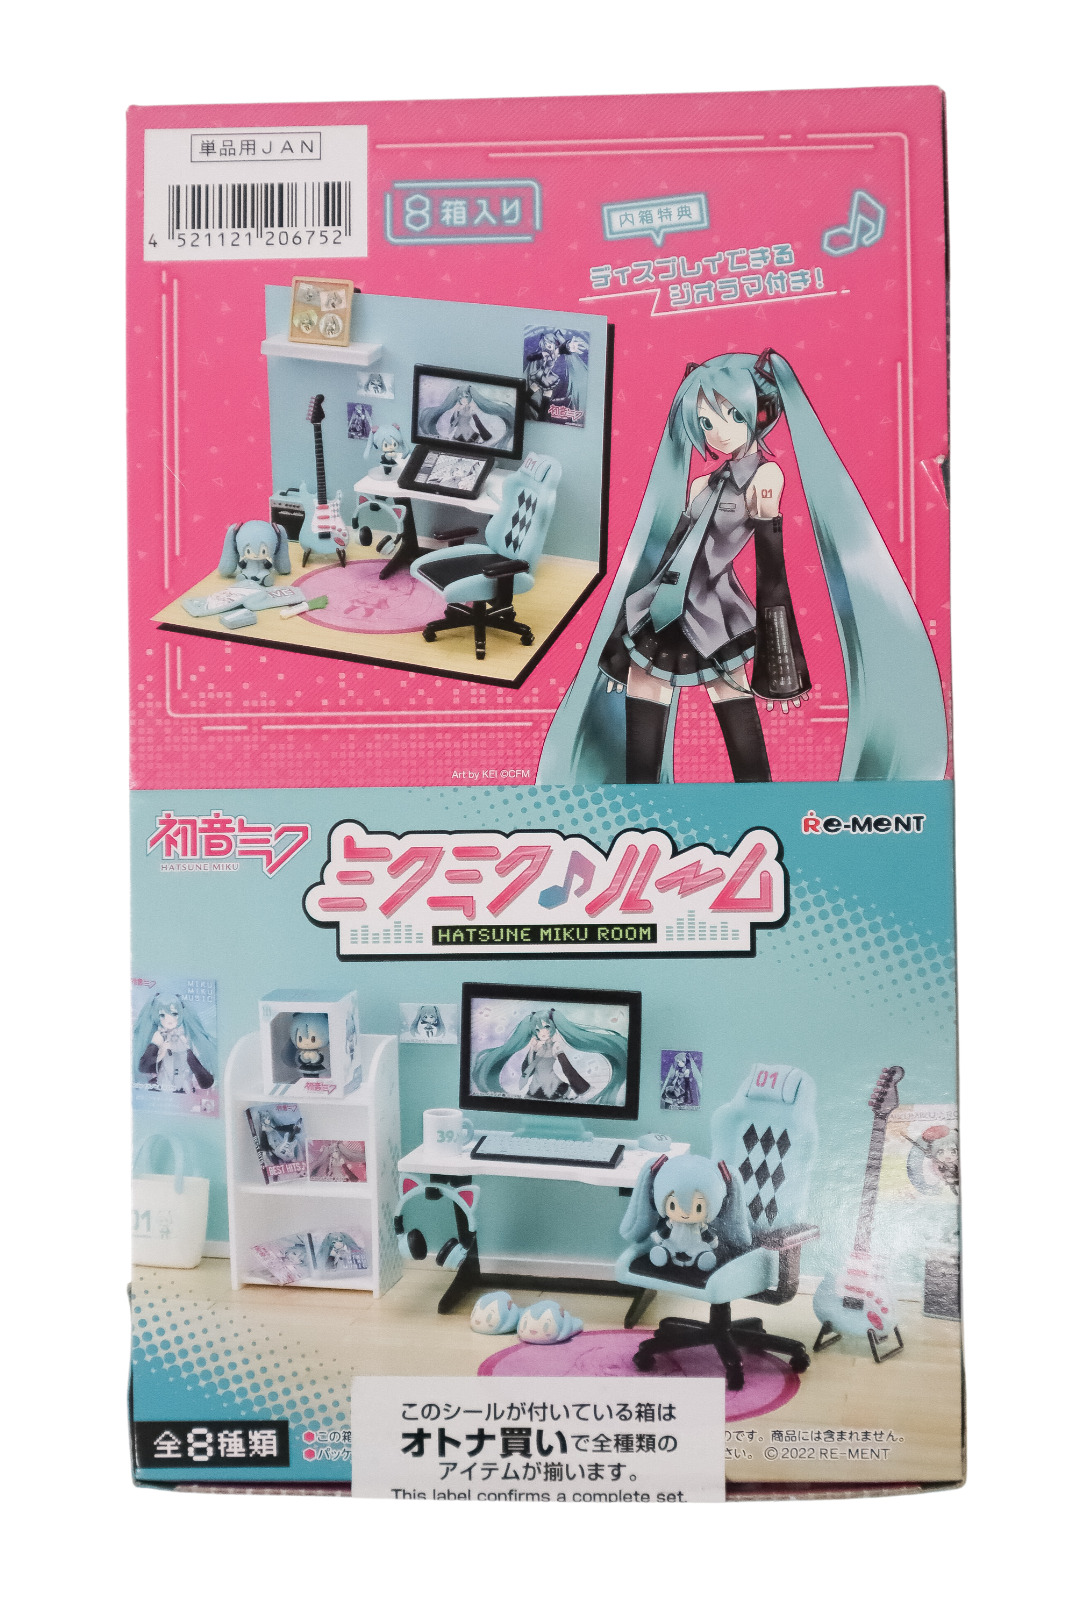 Re-Ment Hatsune Miku Room Box Complete 8 Piece Set